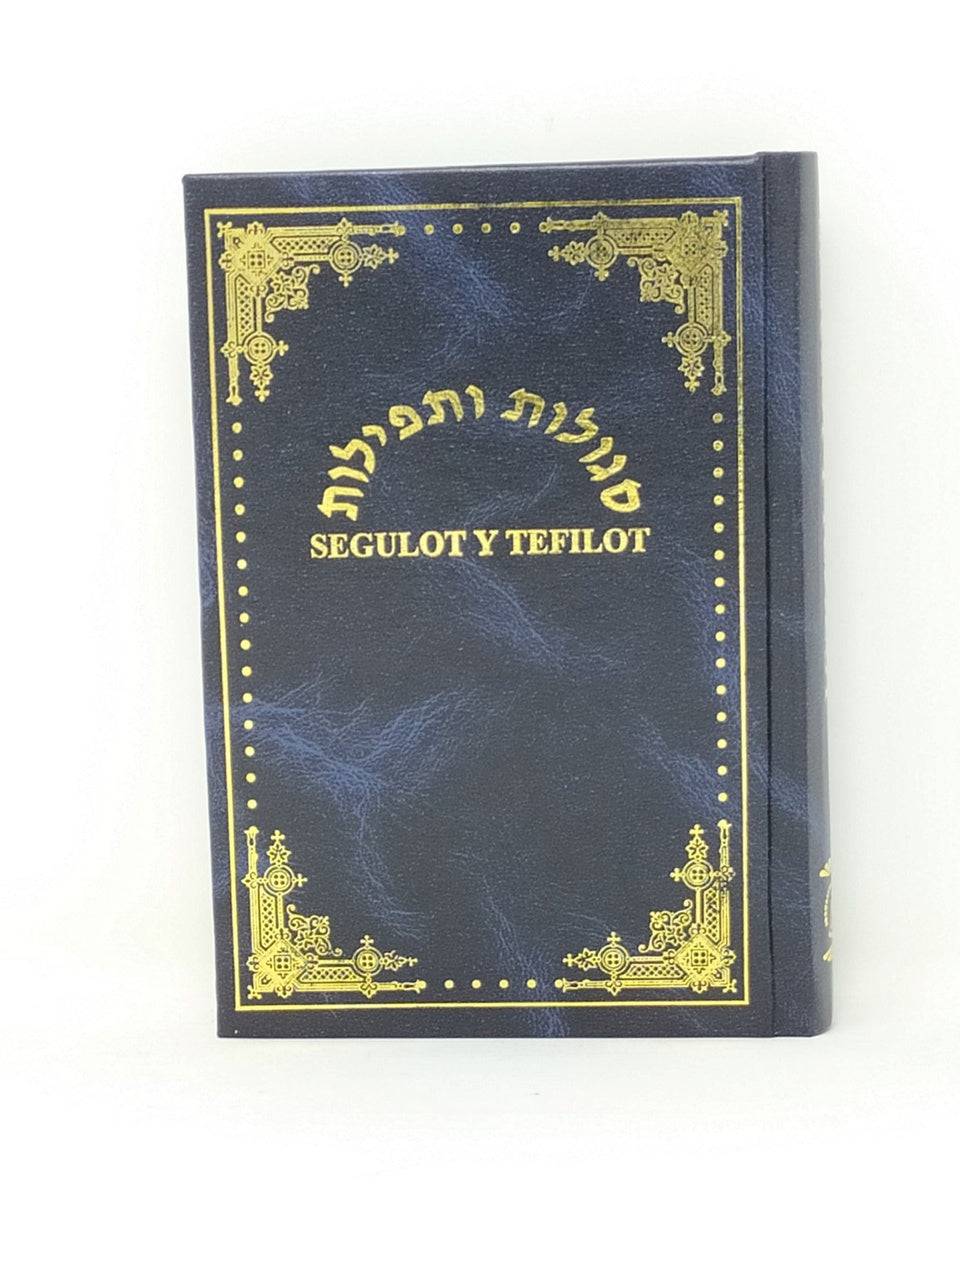 Segulot y tefilot azul - Libreria Jerusalem Centro